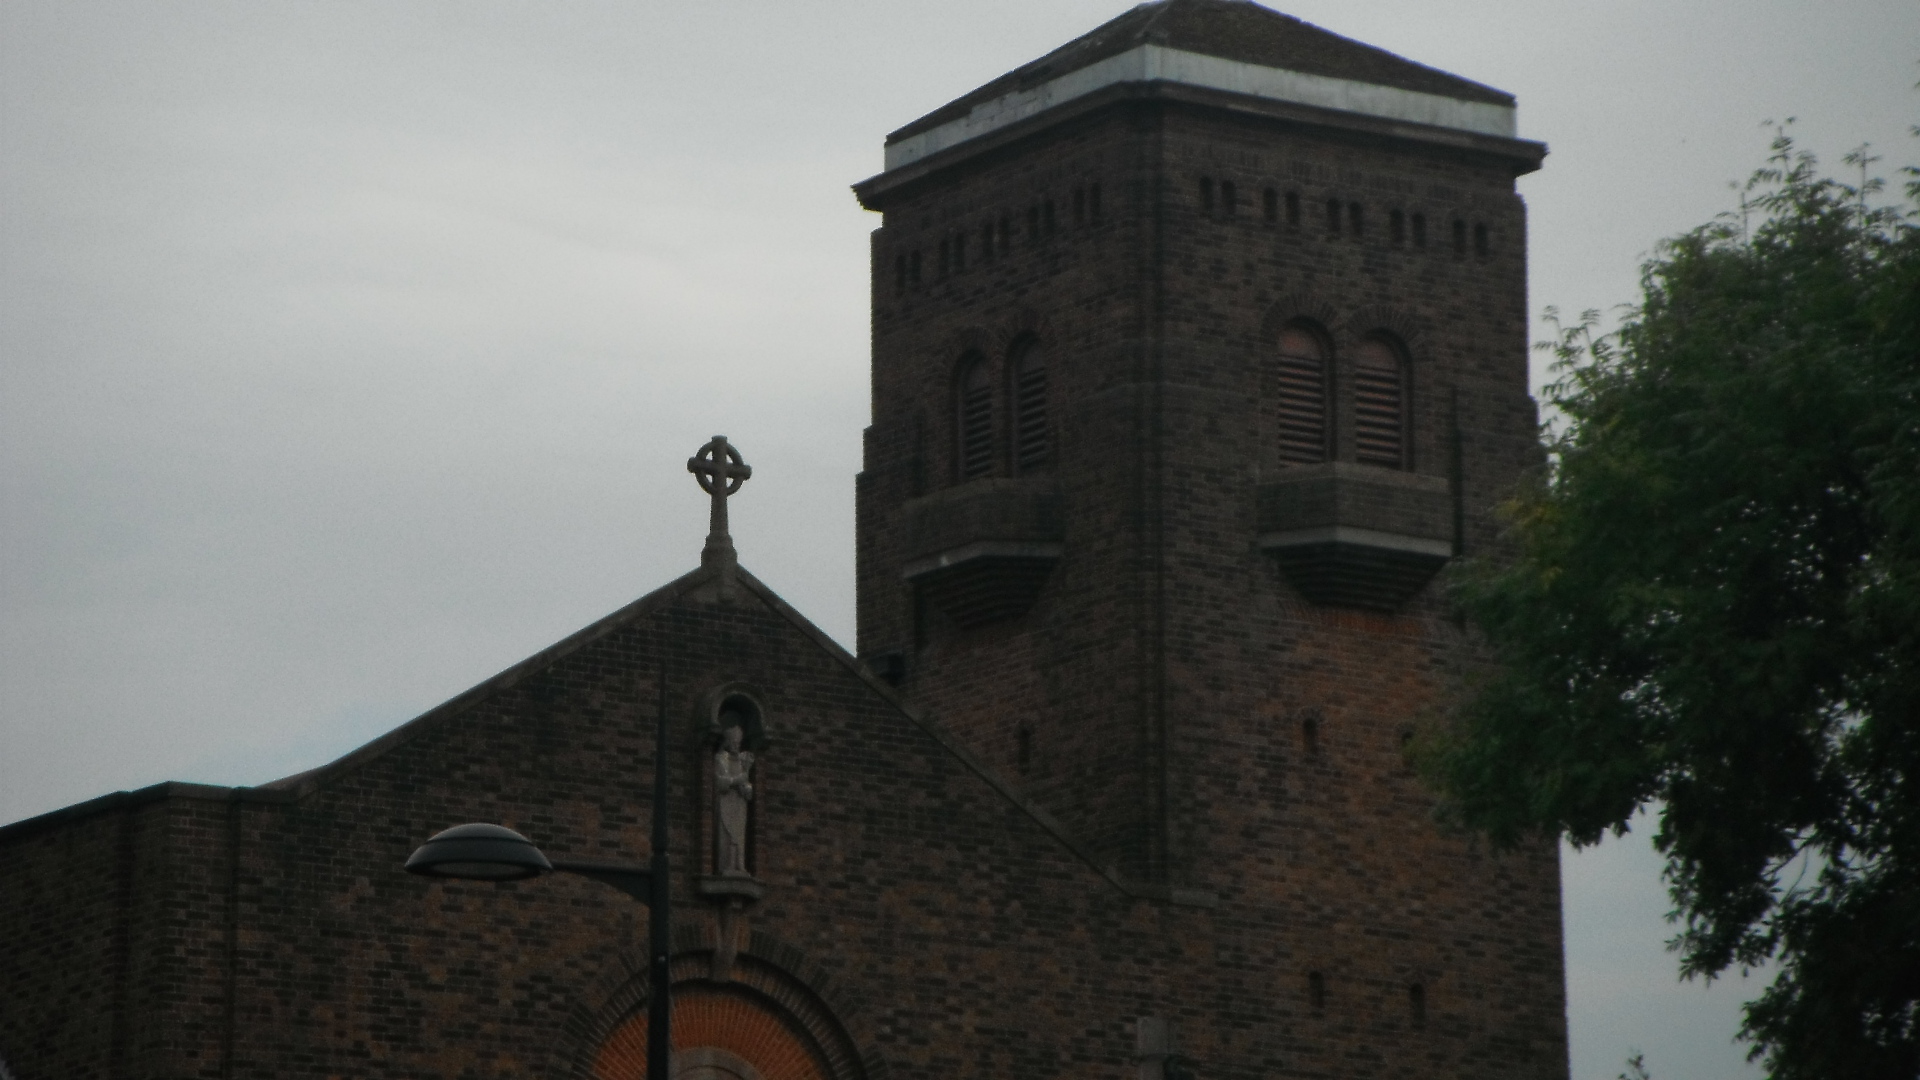 Photo taken by me – St Dunstan's Church, Moston, Manchester